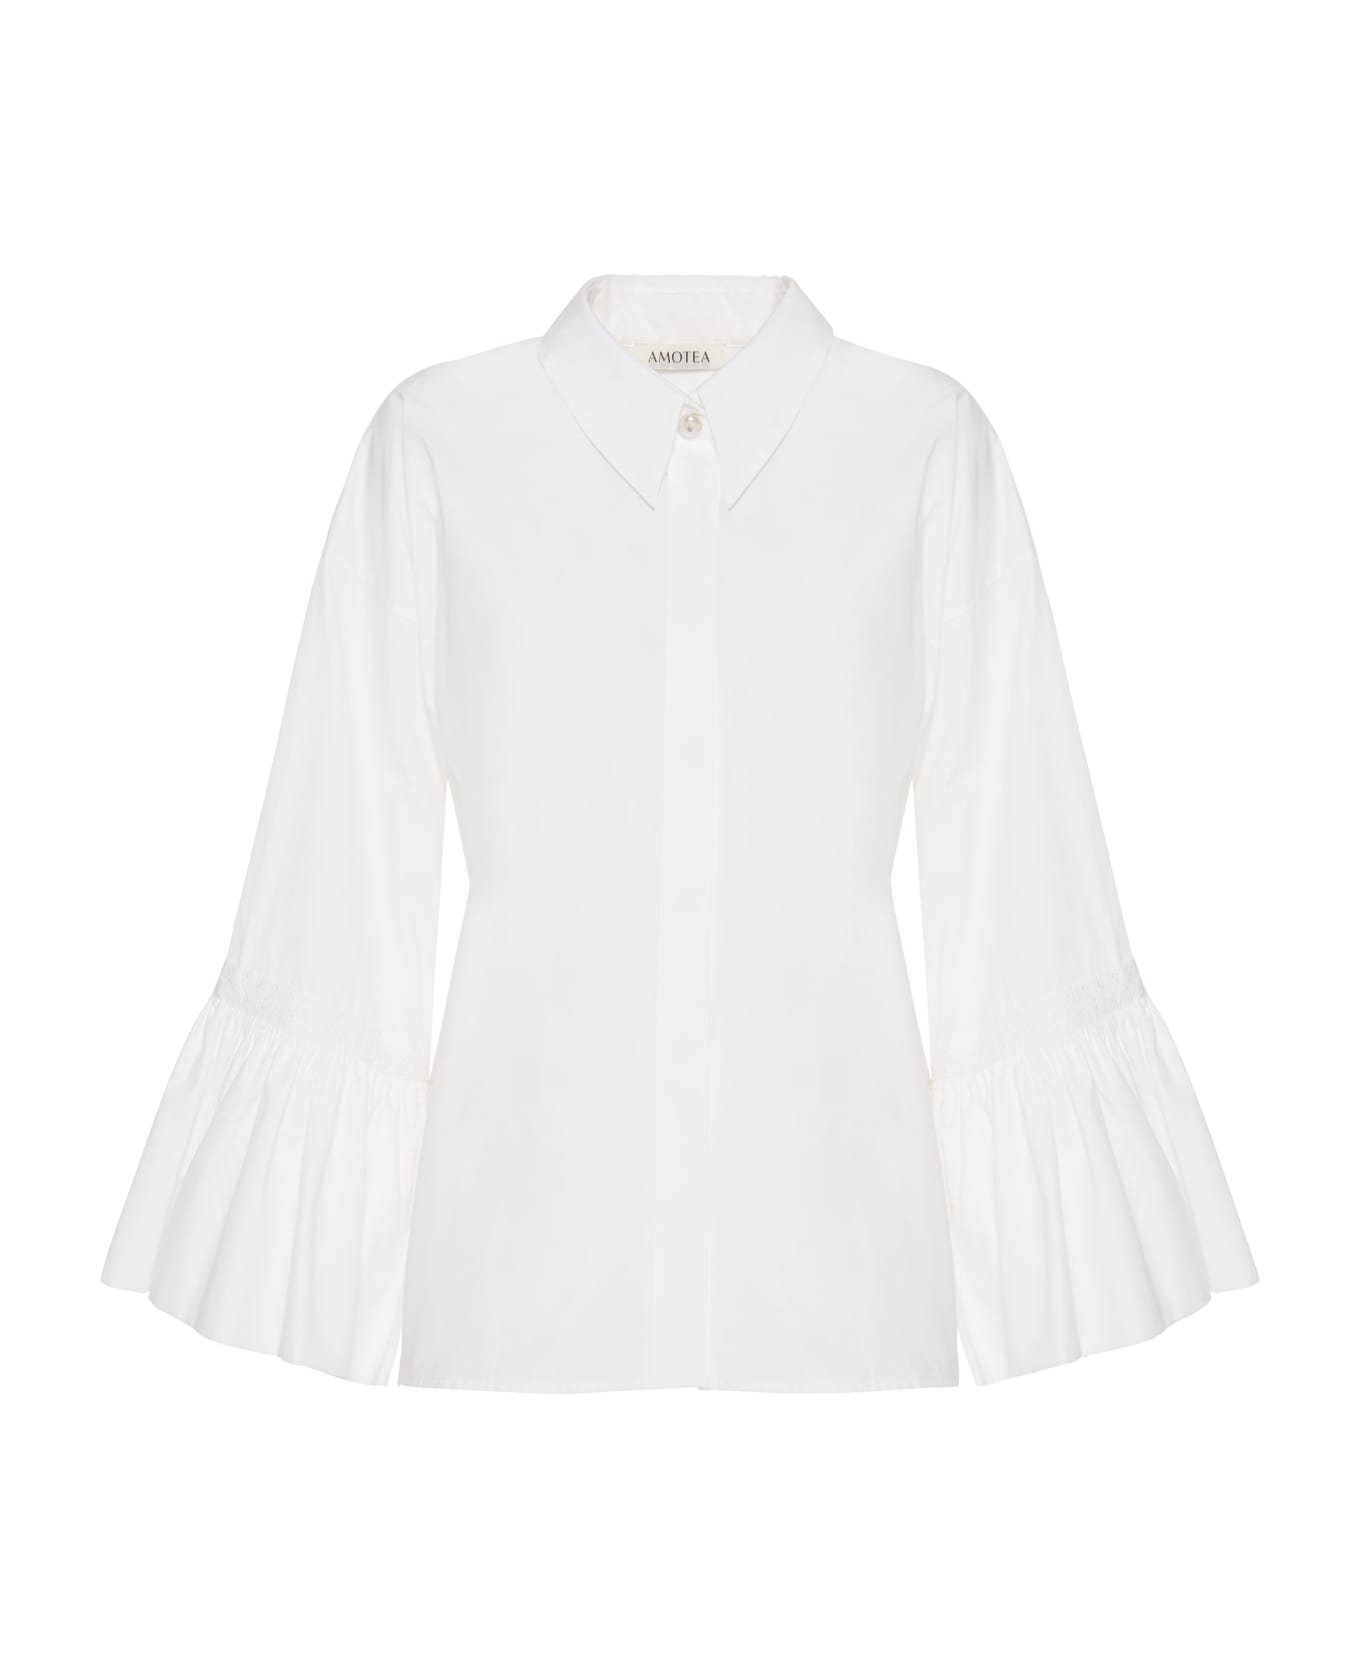 Amotea Claudia Shirt In White Poplin - White ブラウス